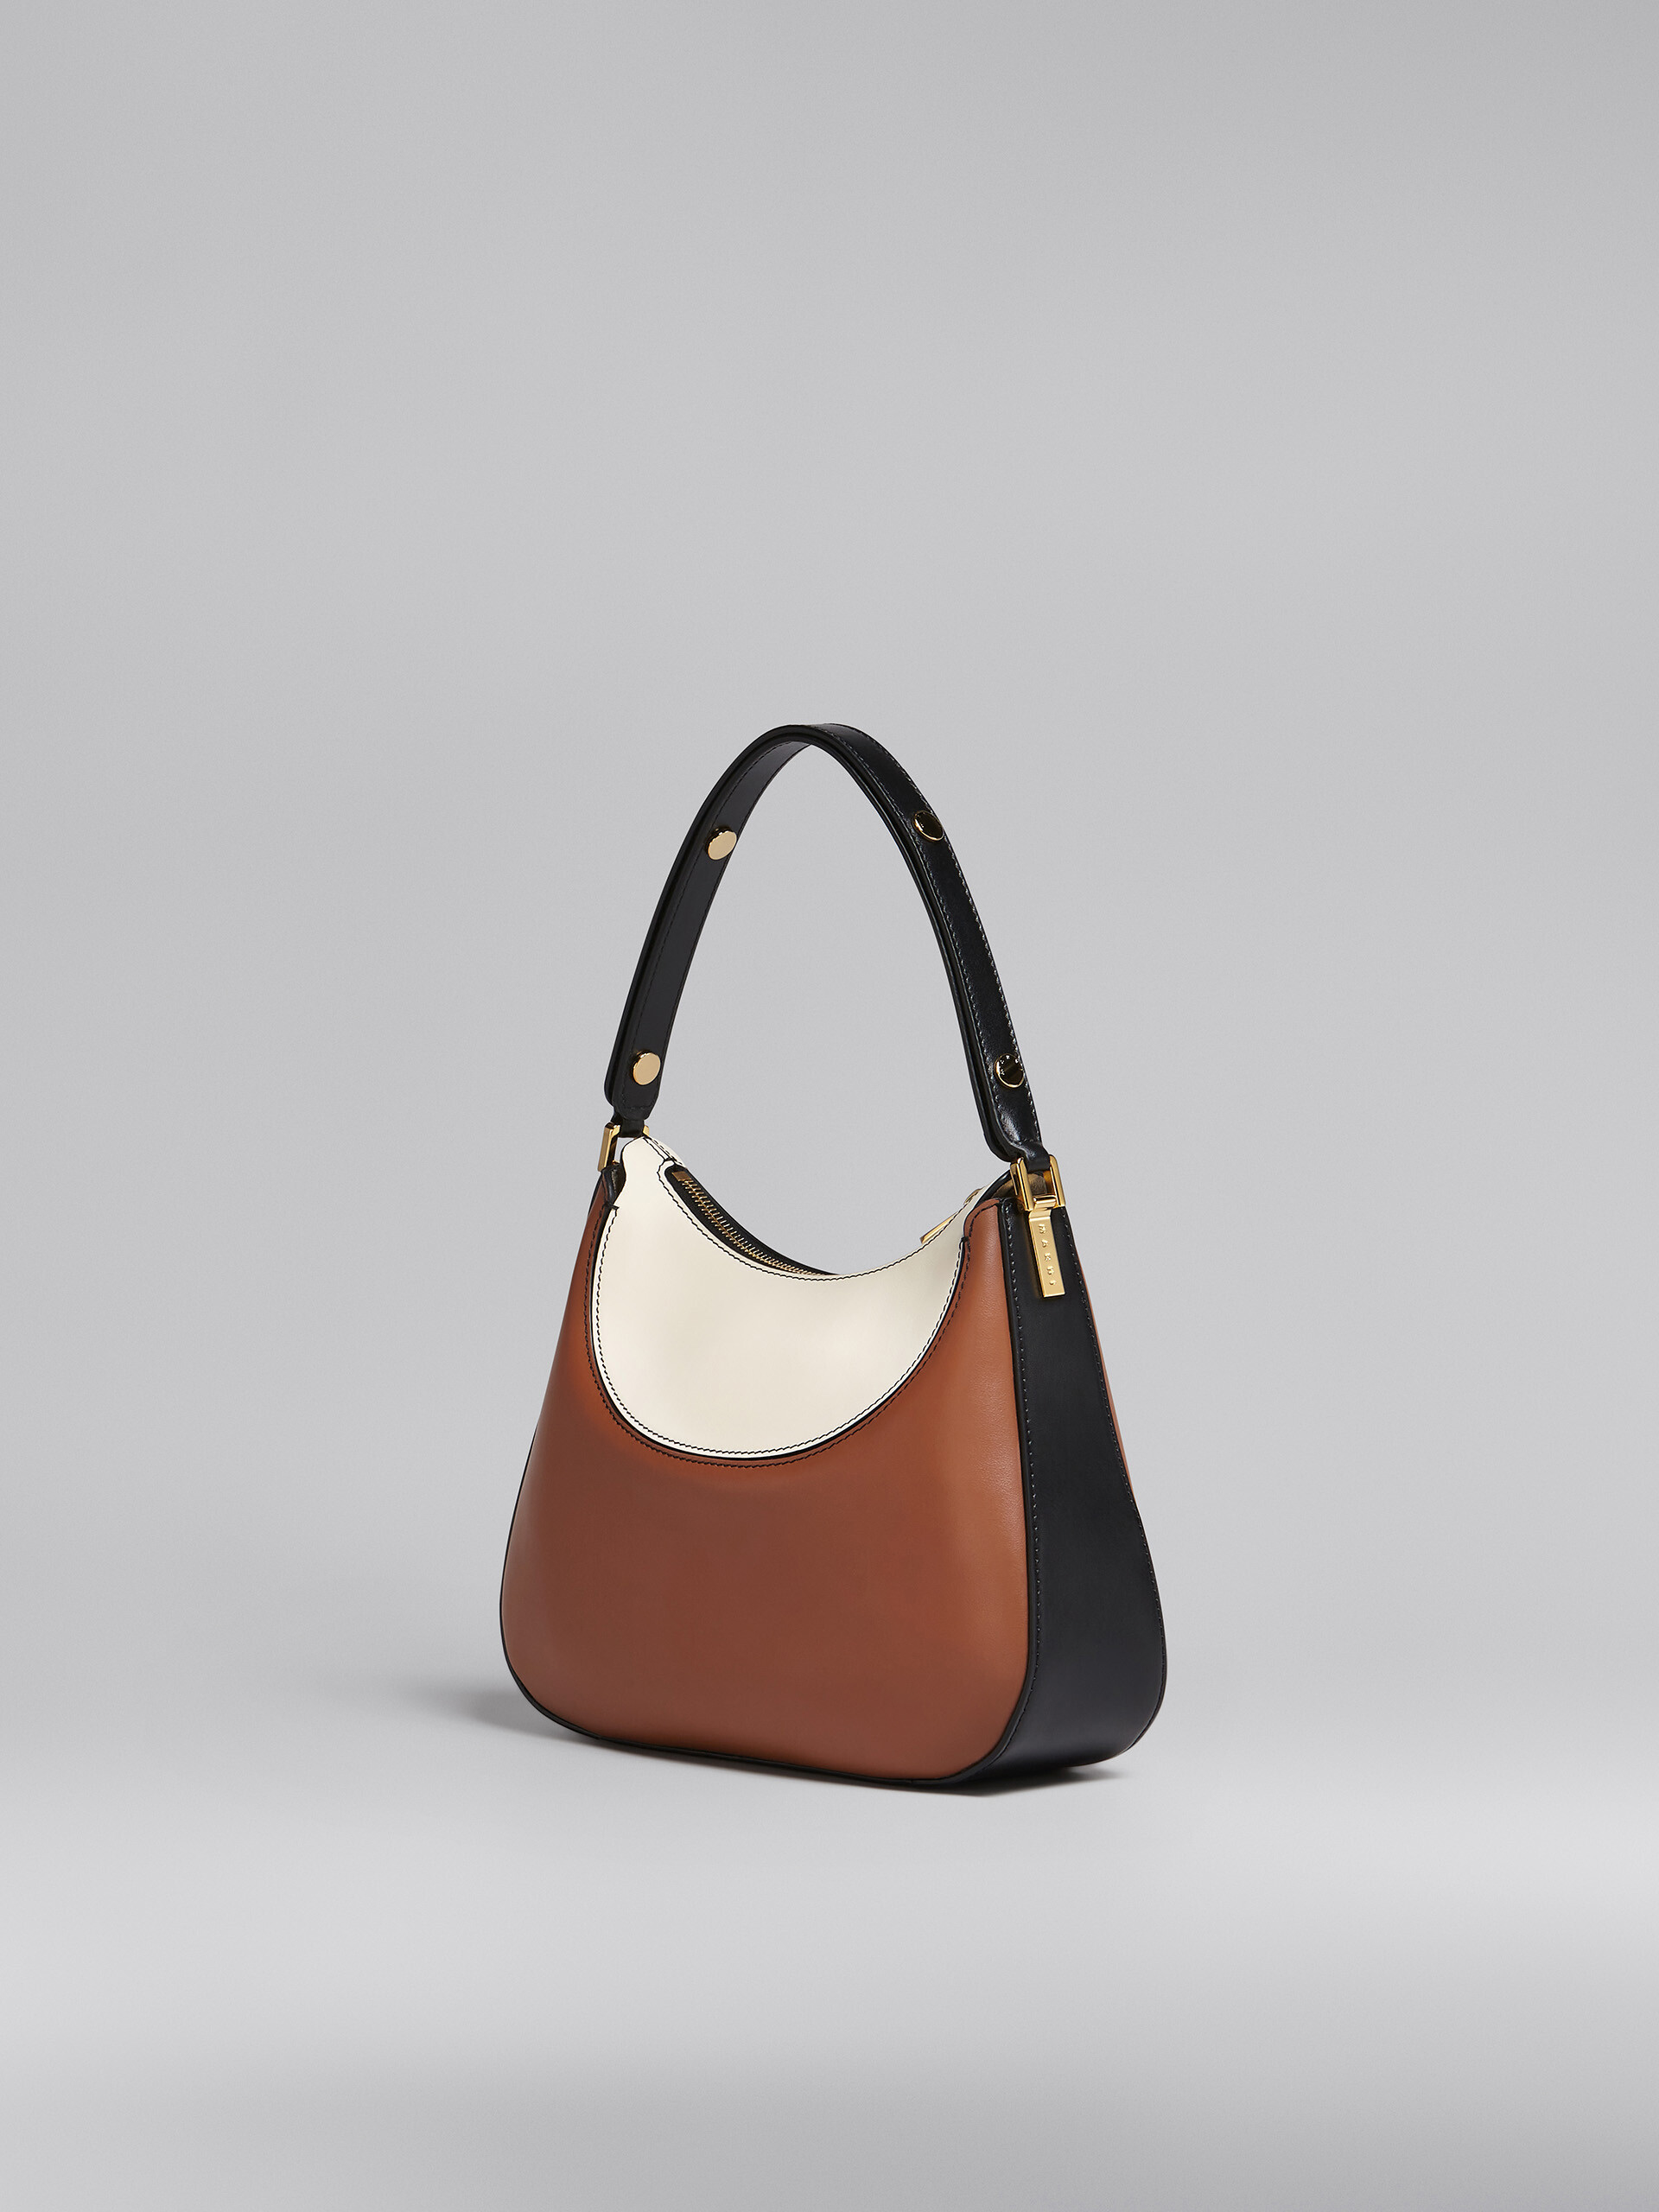 Milano small bag in brown black and white - Handbag - Image 3